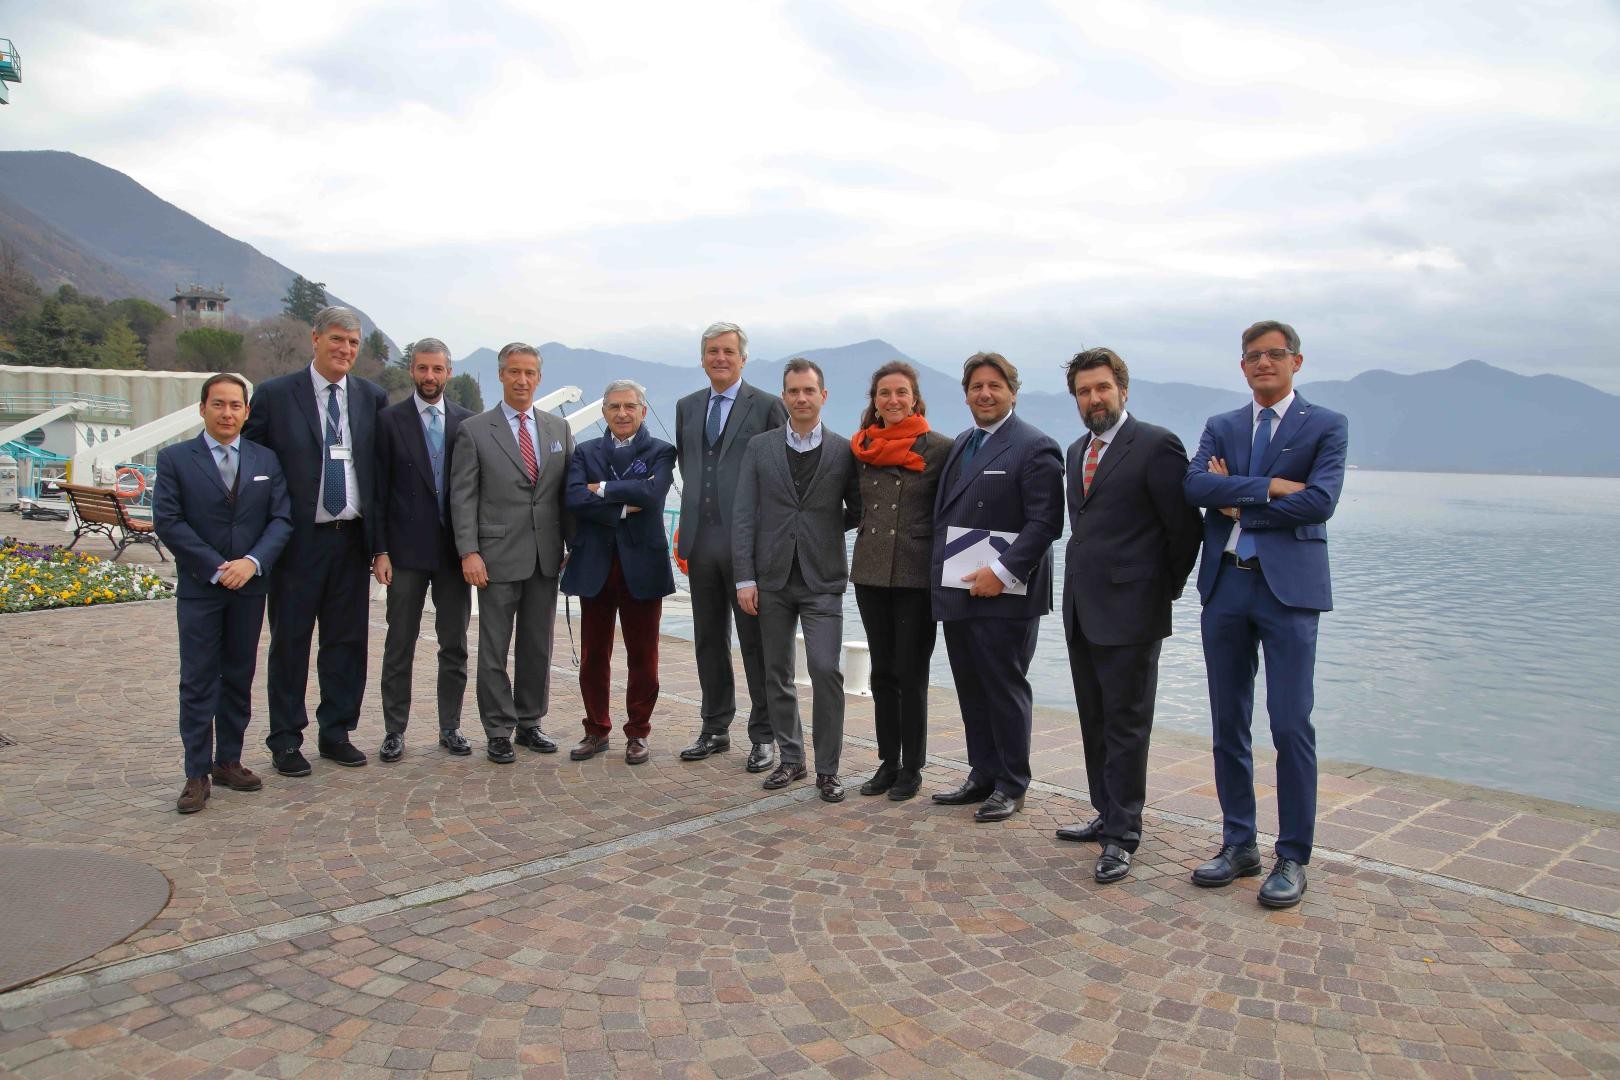 Nautica Italiana boasts now 103 members with Fincantieri